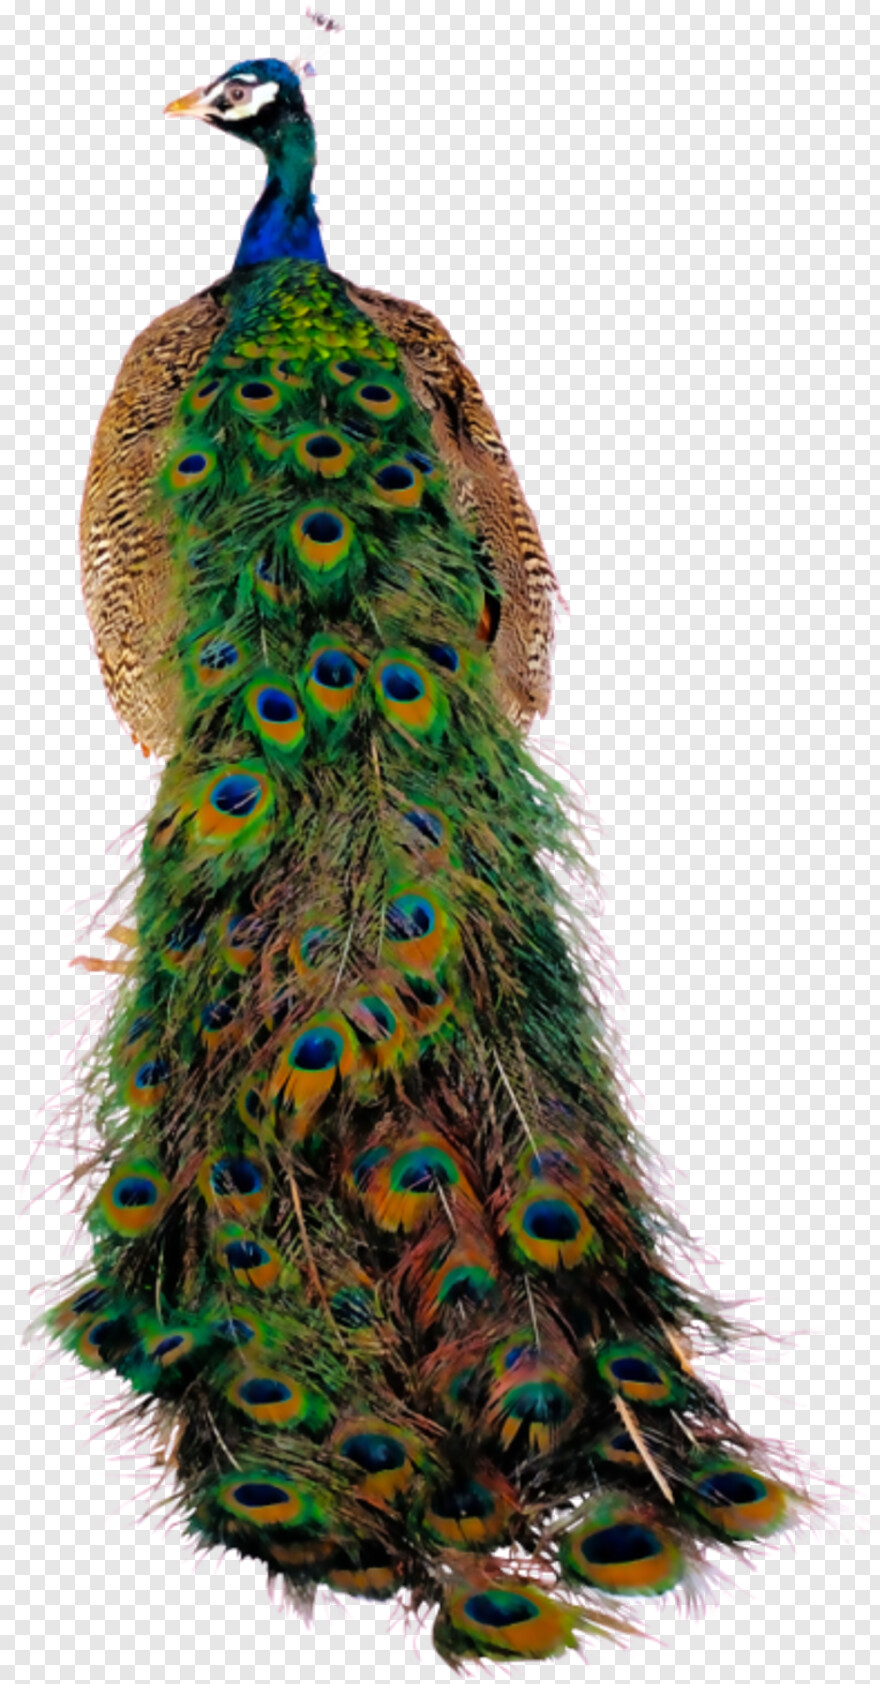 peacock-hd # 360241